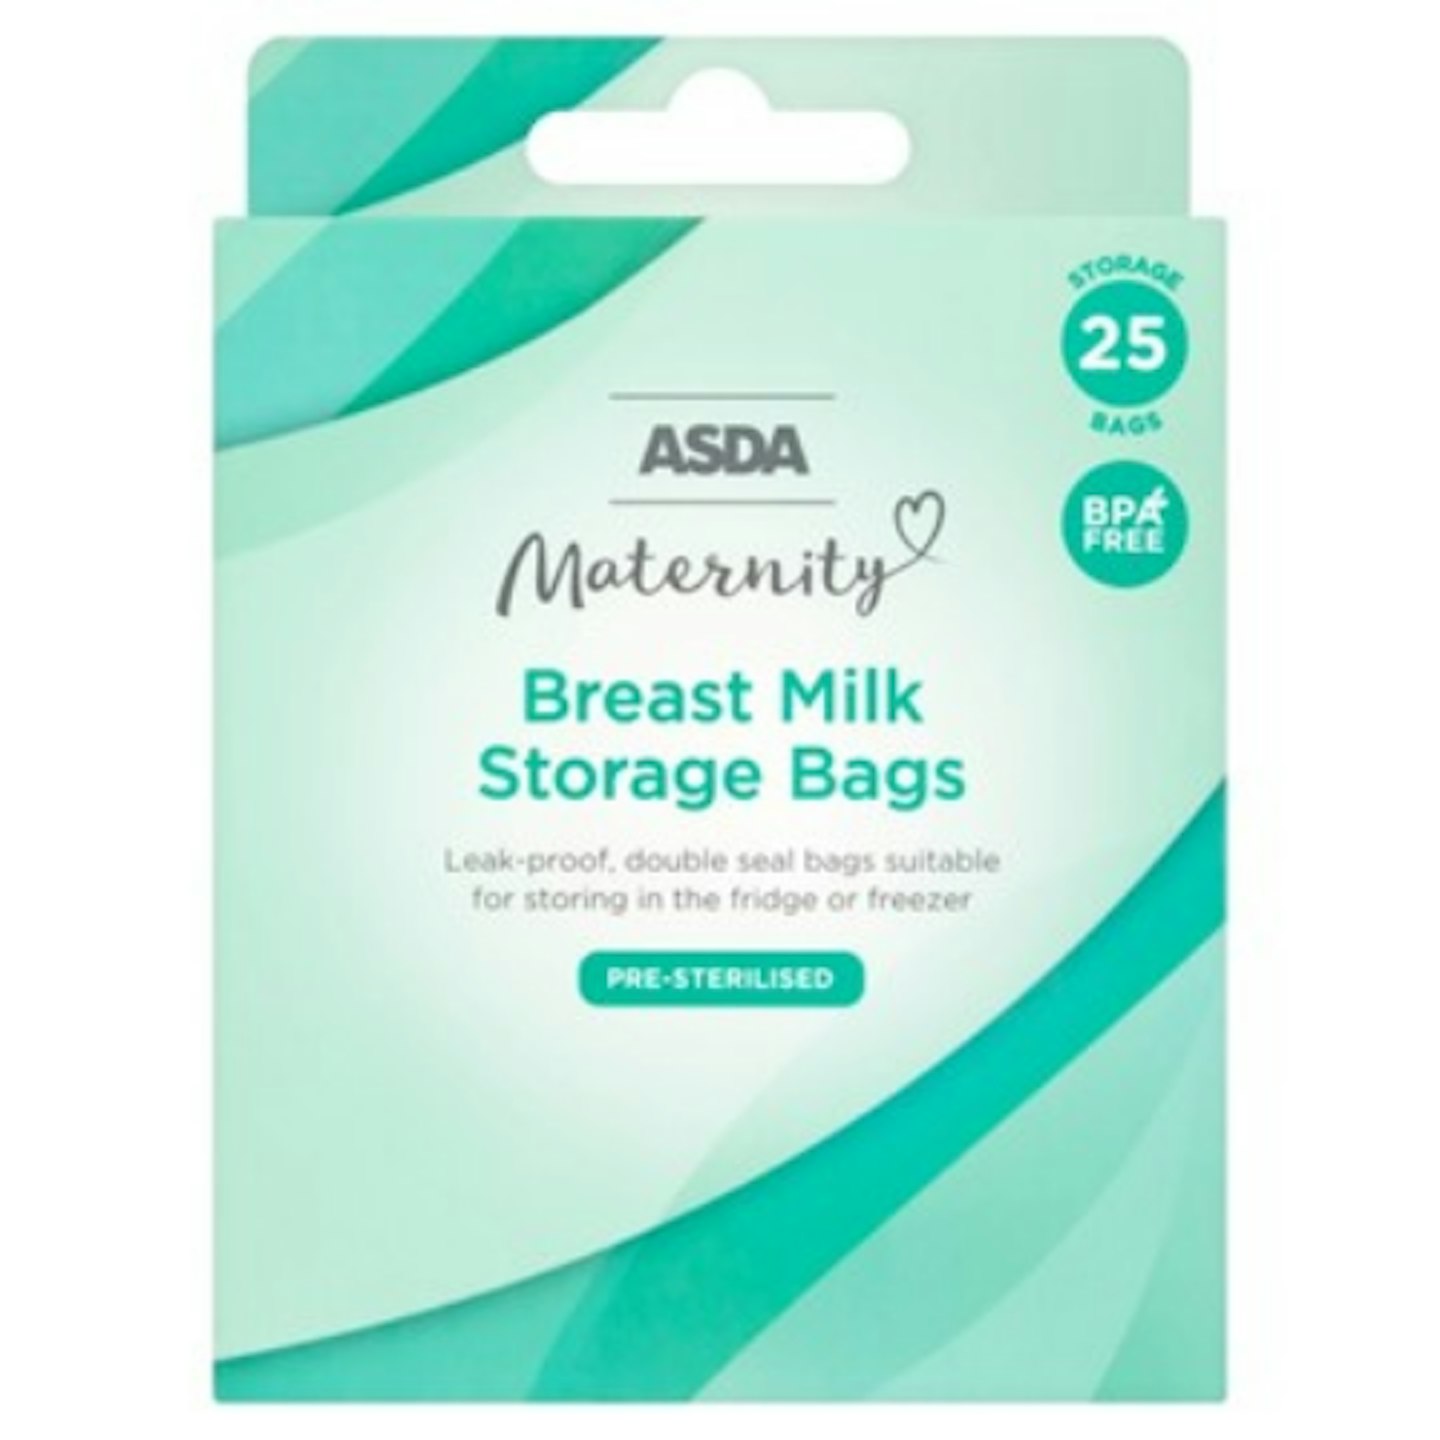 https://images.bauerhosting.com/affiliates/sites/12/motherandbaby/legacy/root/asda-maternity-25-breast-milk-storage-bags.png?auto=format&w=1440&q=80